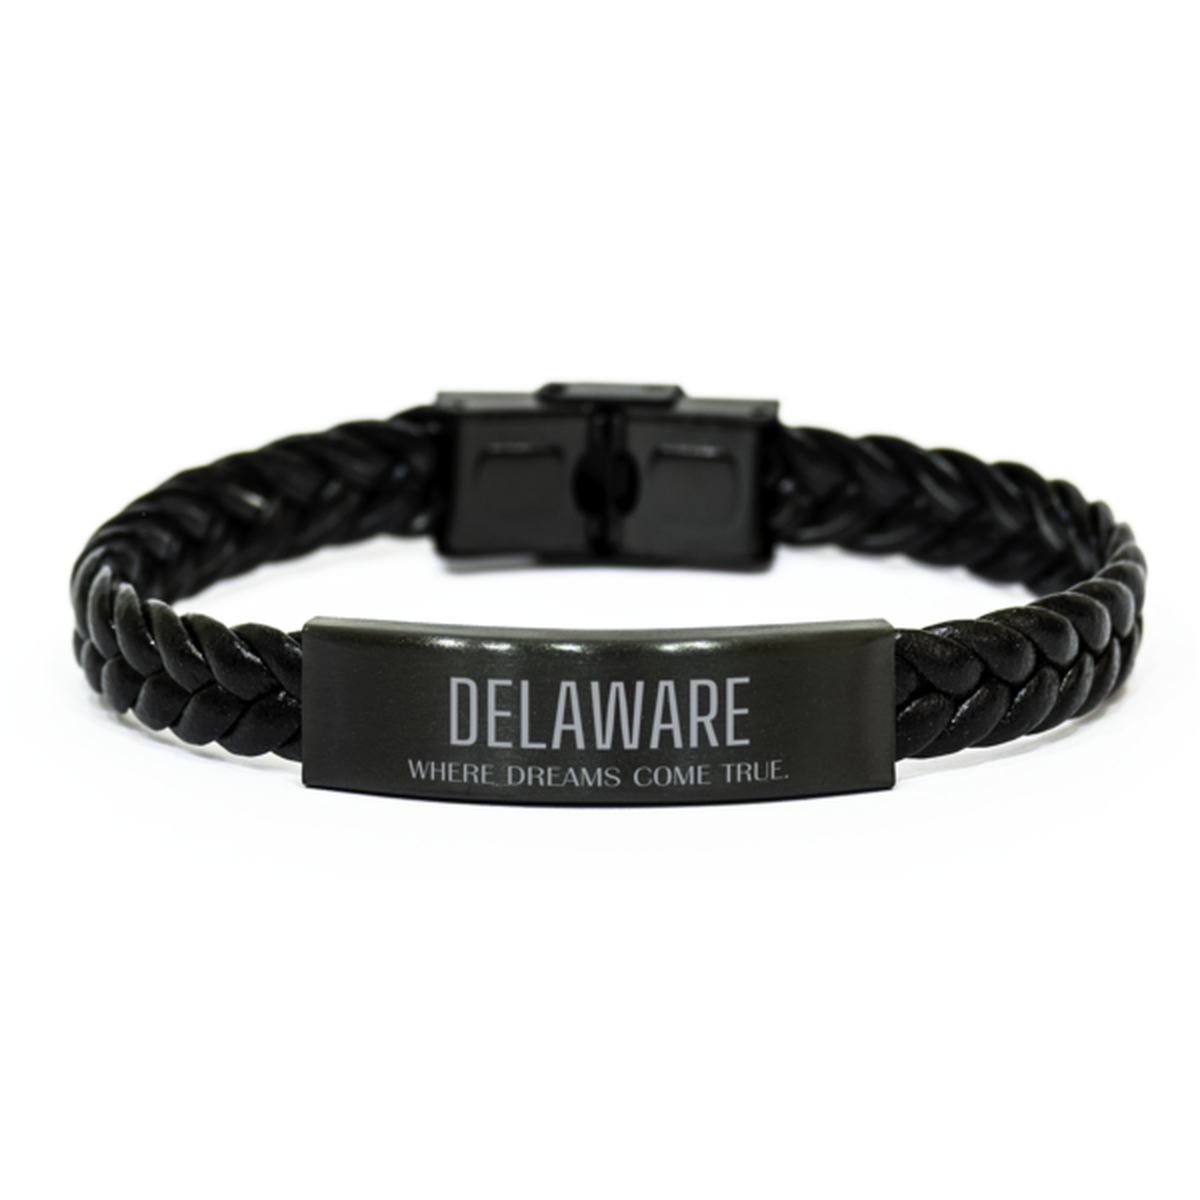 Love Delaware State Braided Leather Bracelet, Delaware Where dreams come true, Birthday Inspirational Gifts For Delaware Men, Women, Friends